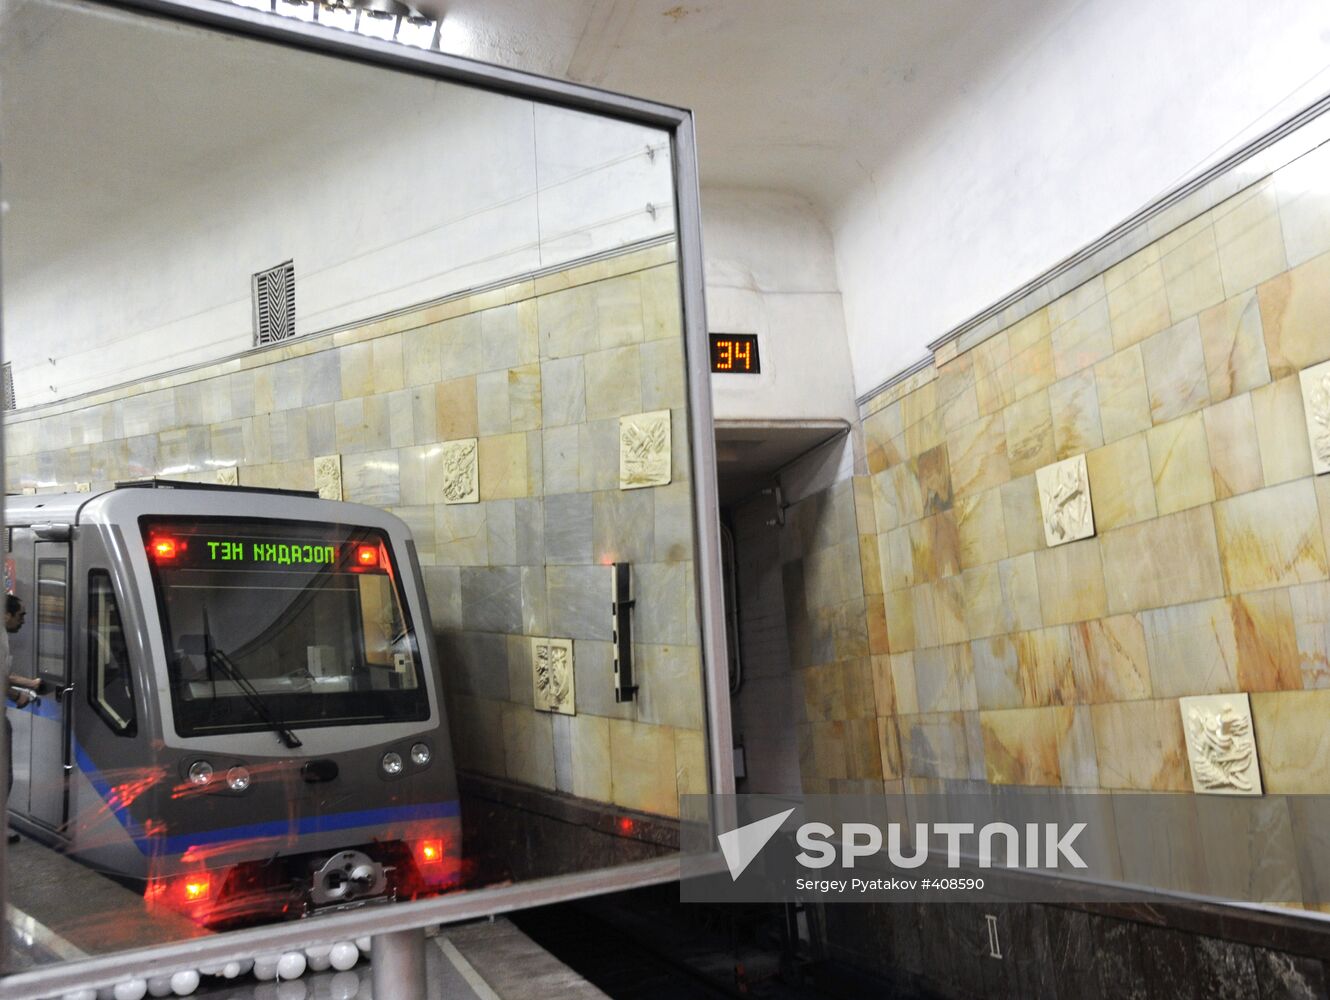 Upgraded Metro train Rusich goes into service